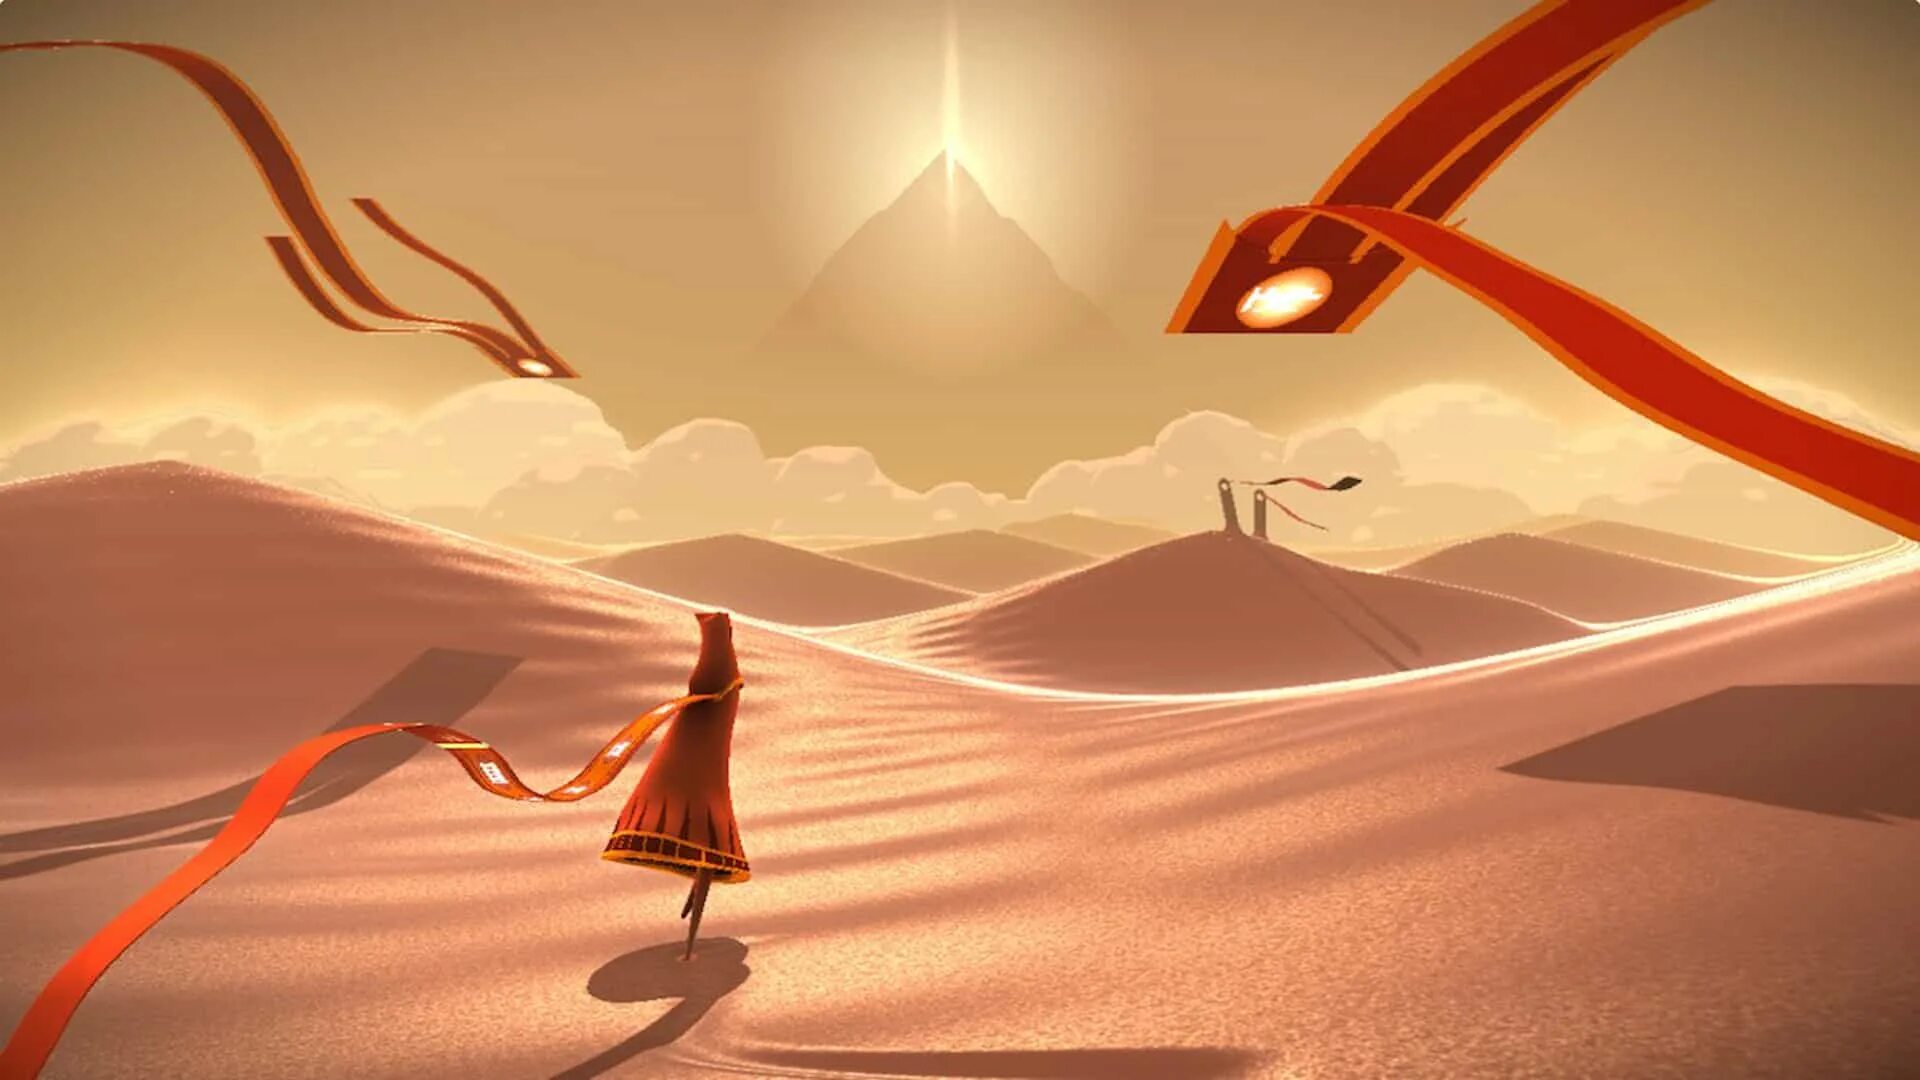 Journey игра thatgamecompany. Journey (игра, 2012). Джорни путешествие игра. Пустыня из игры Джорни.